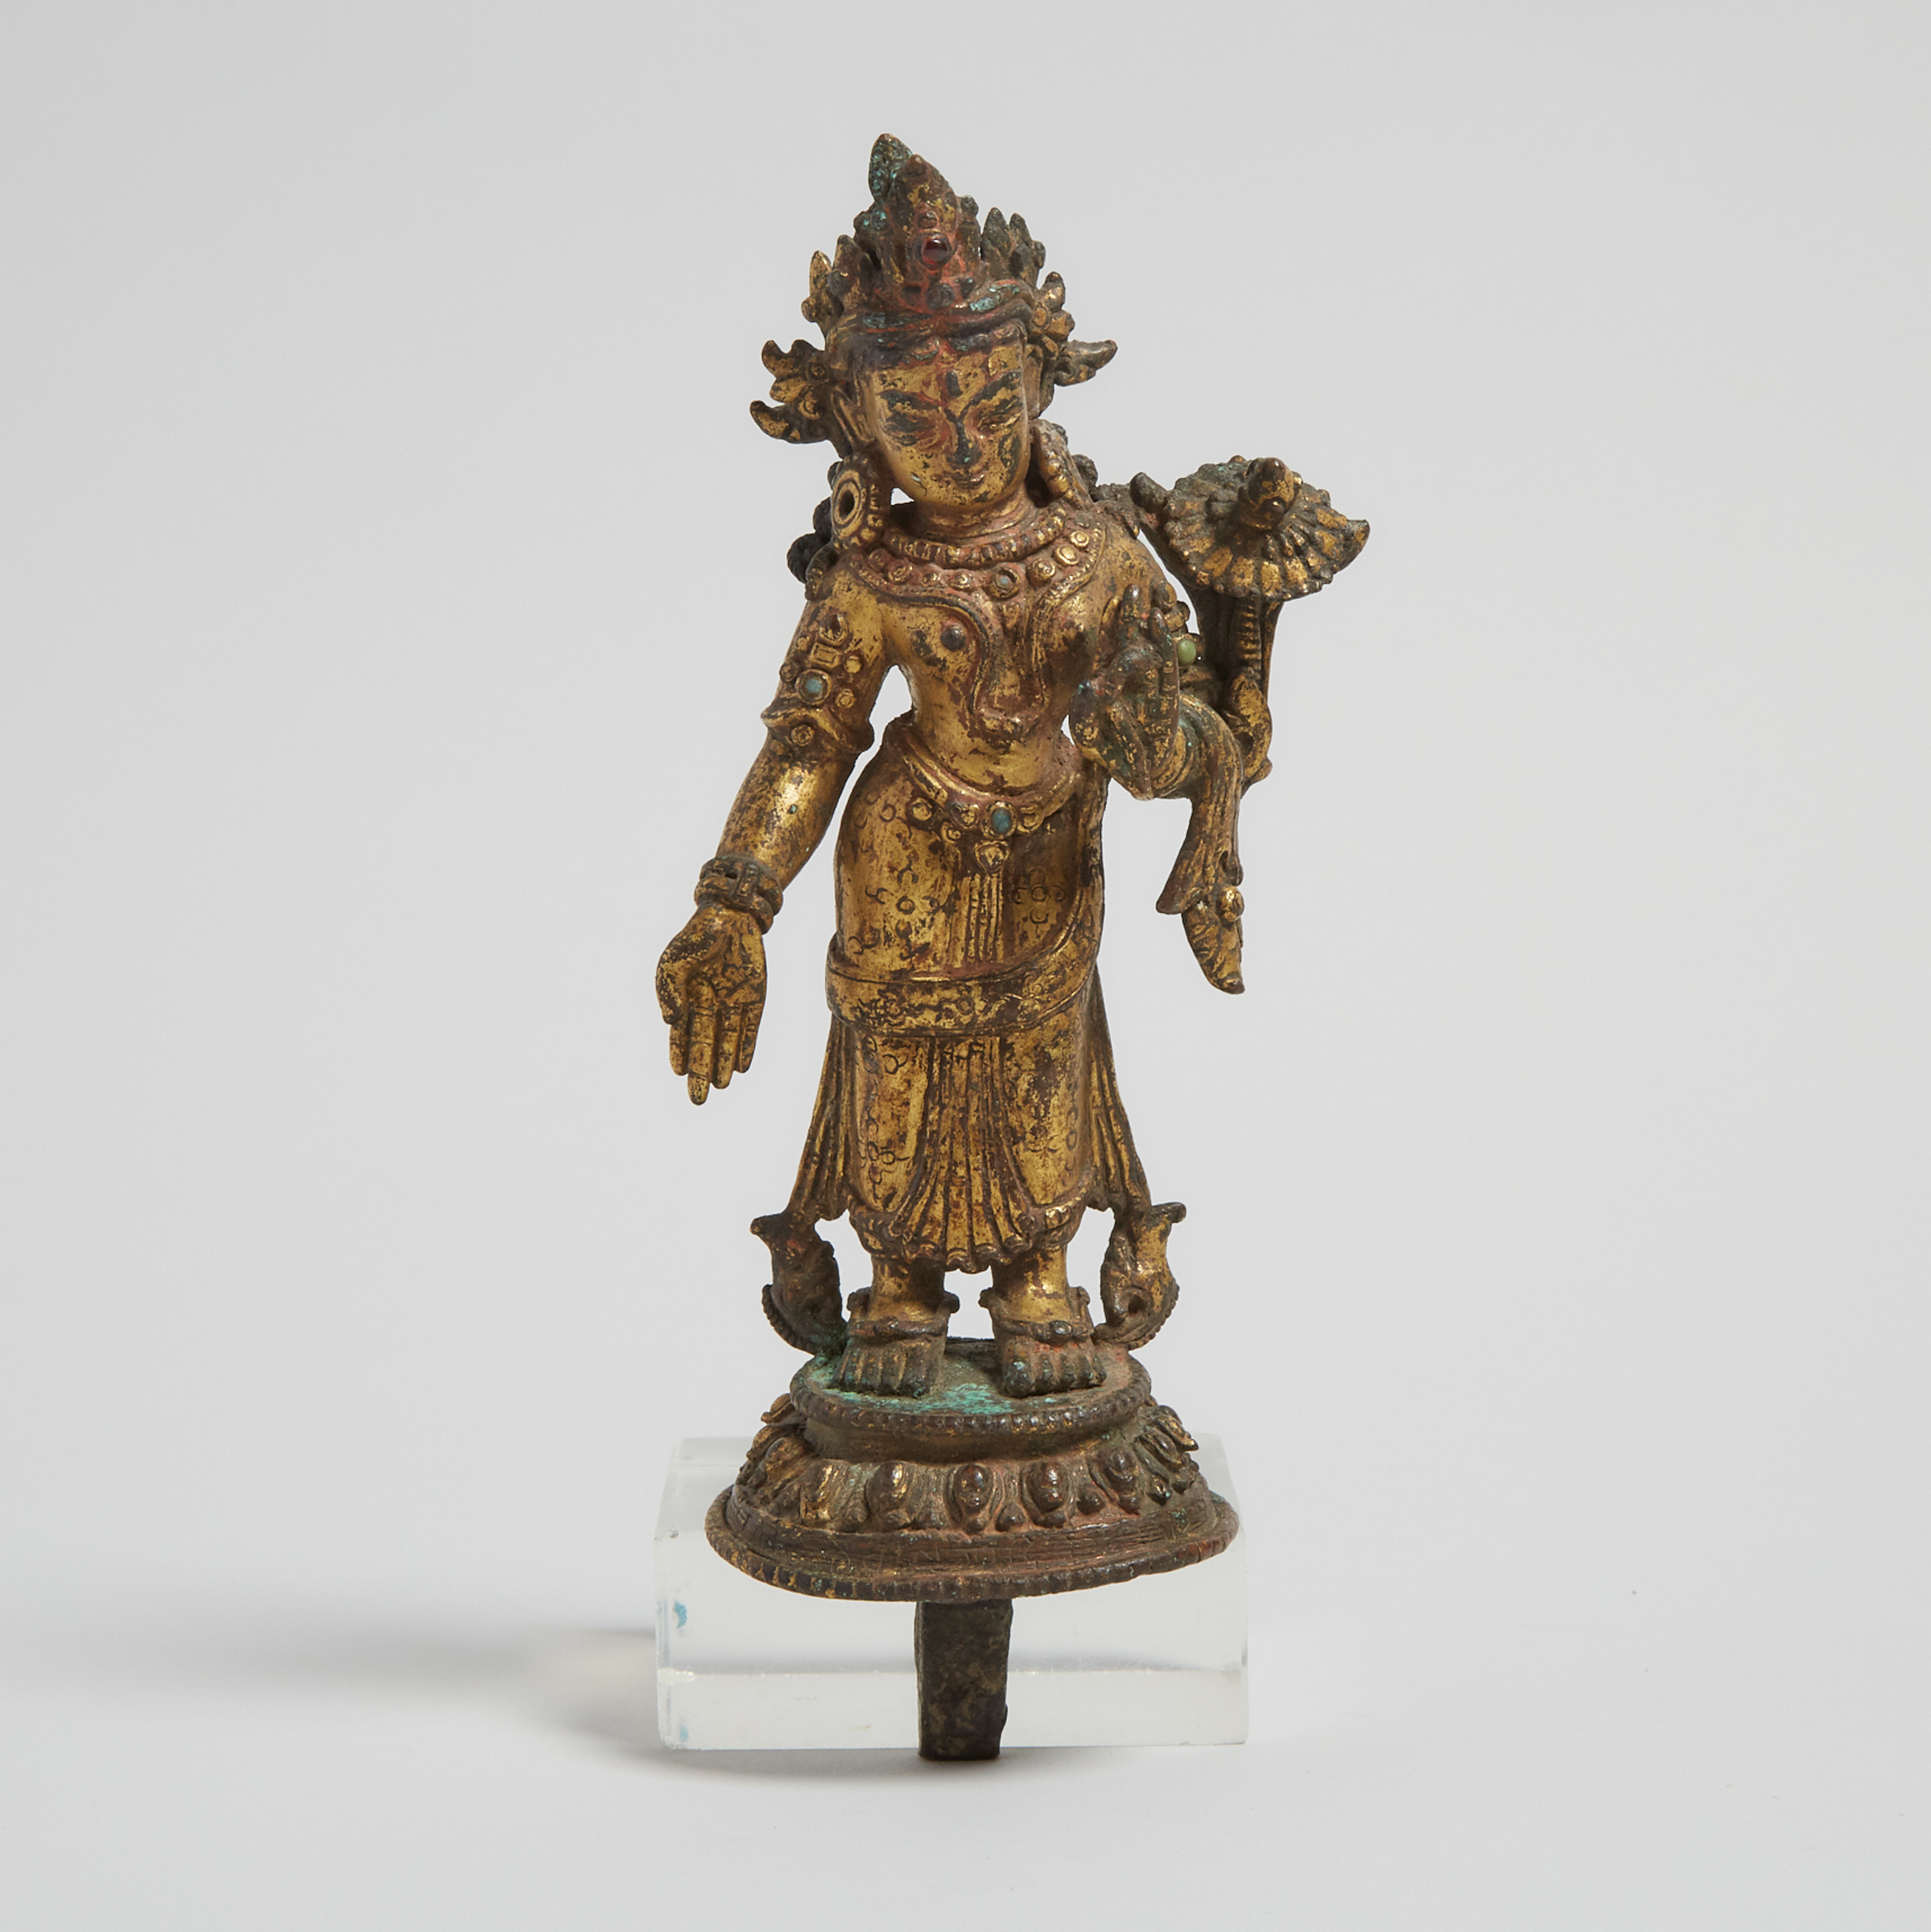 A Gilt Bronze Standing Figure of Padmapani, Nepal, 15th Century or Later